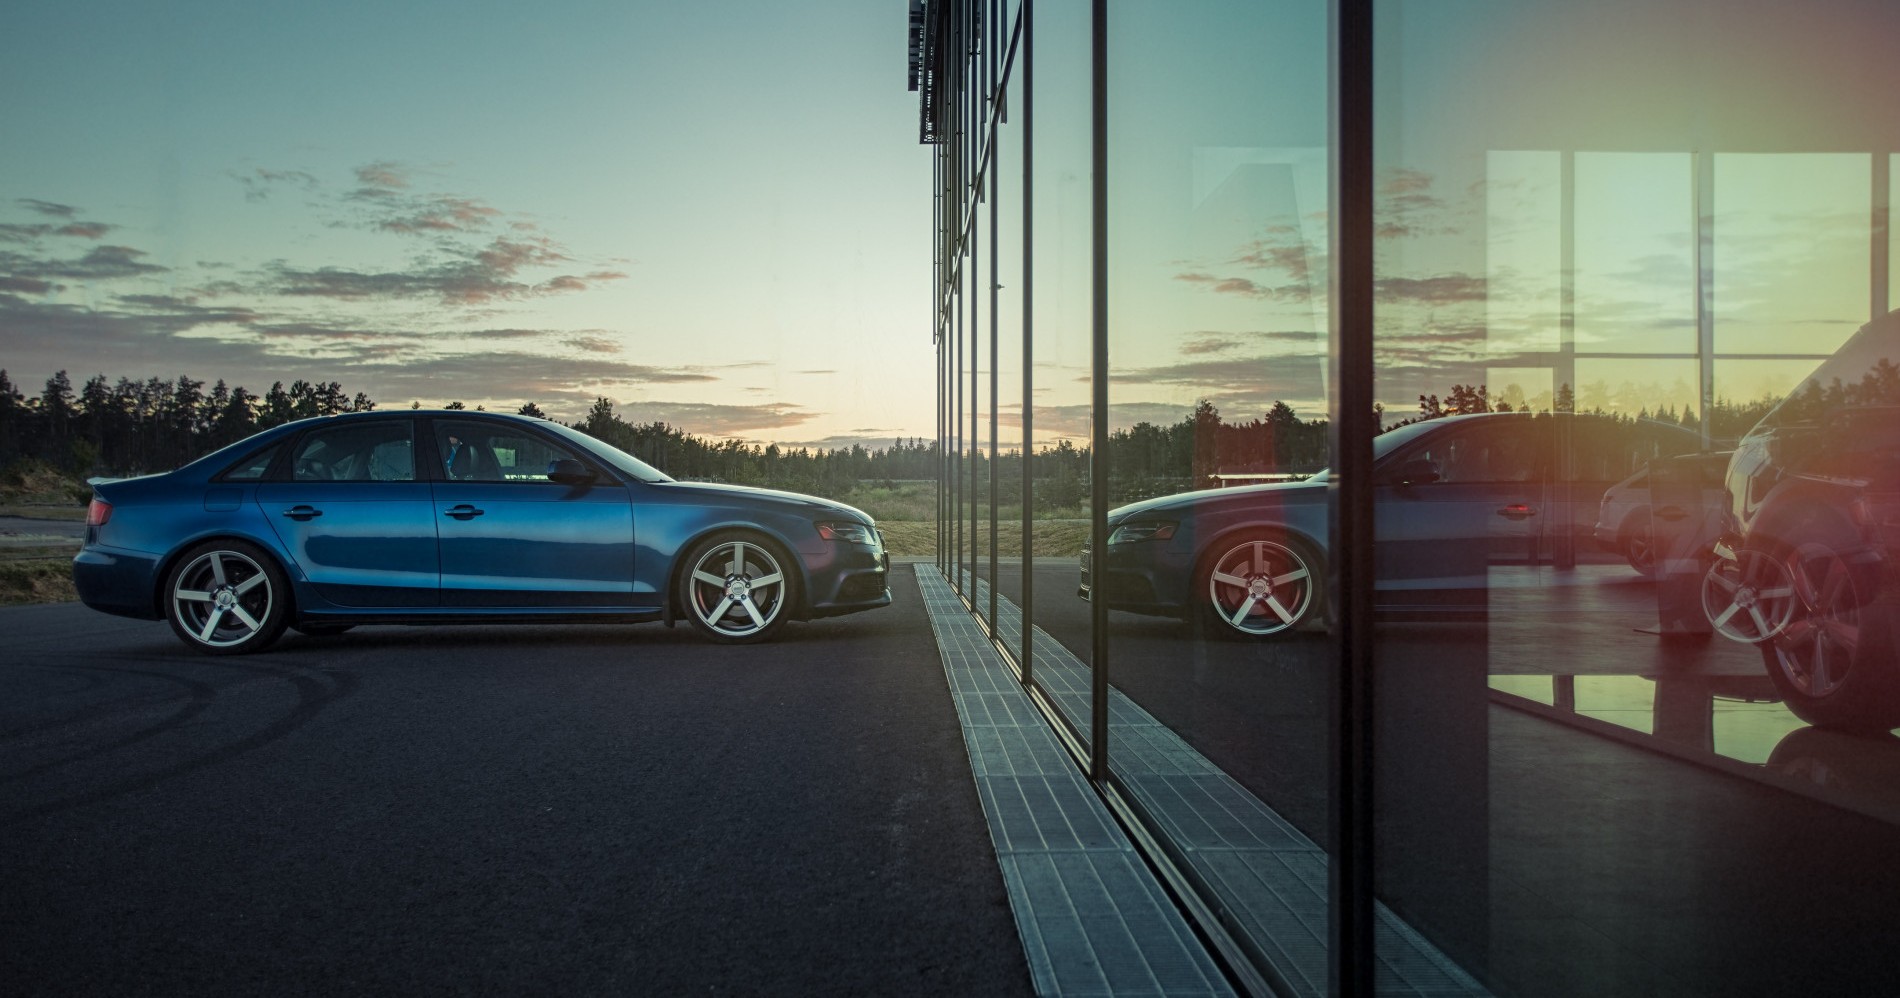 Blue Audi A4 Quattro Saloon Scene with Swedish architecture at dealership (SOURCE : unsplash Arvid Skywalker)